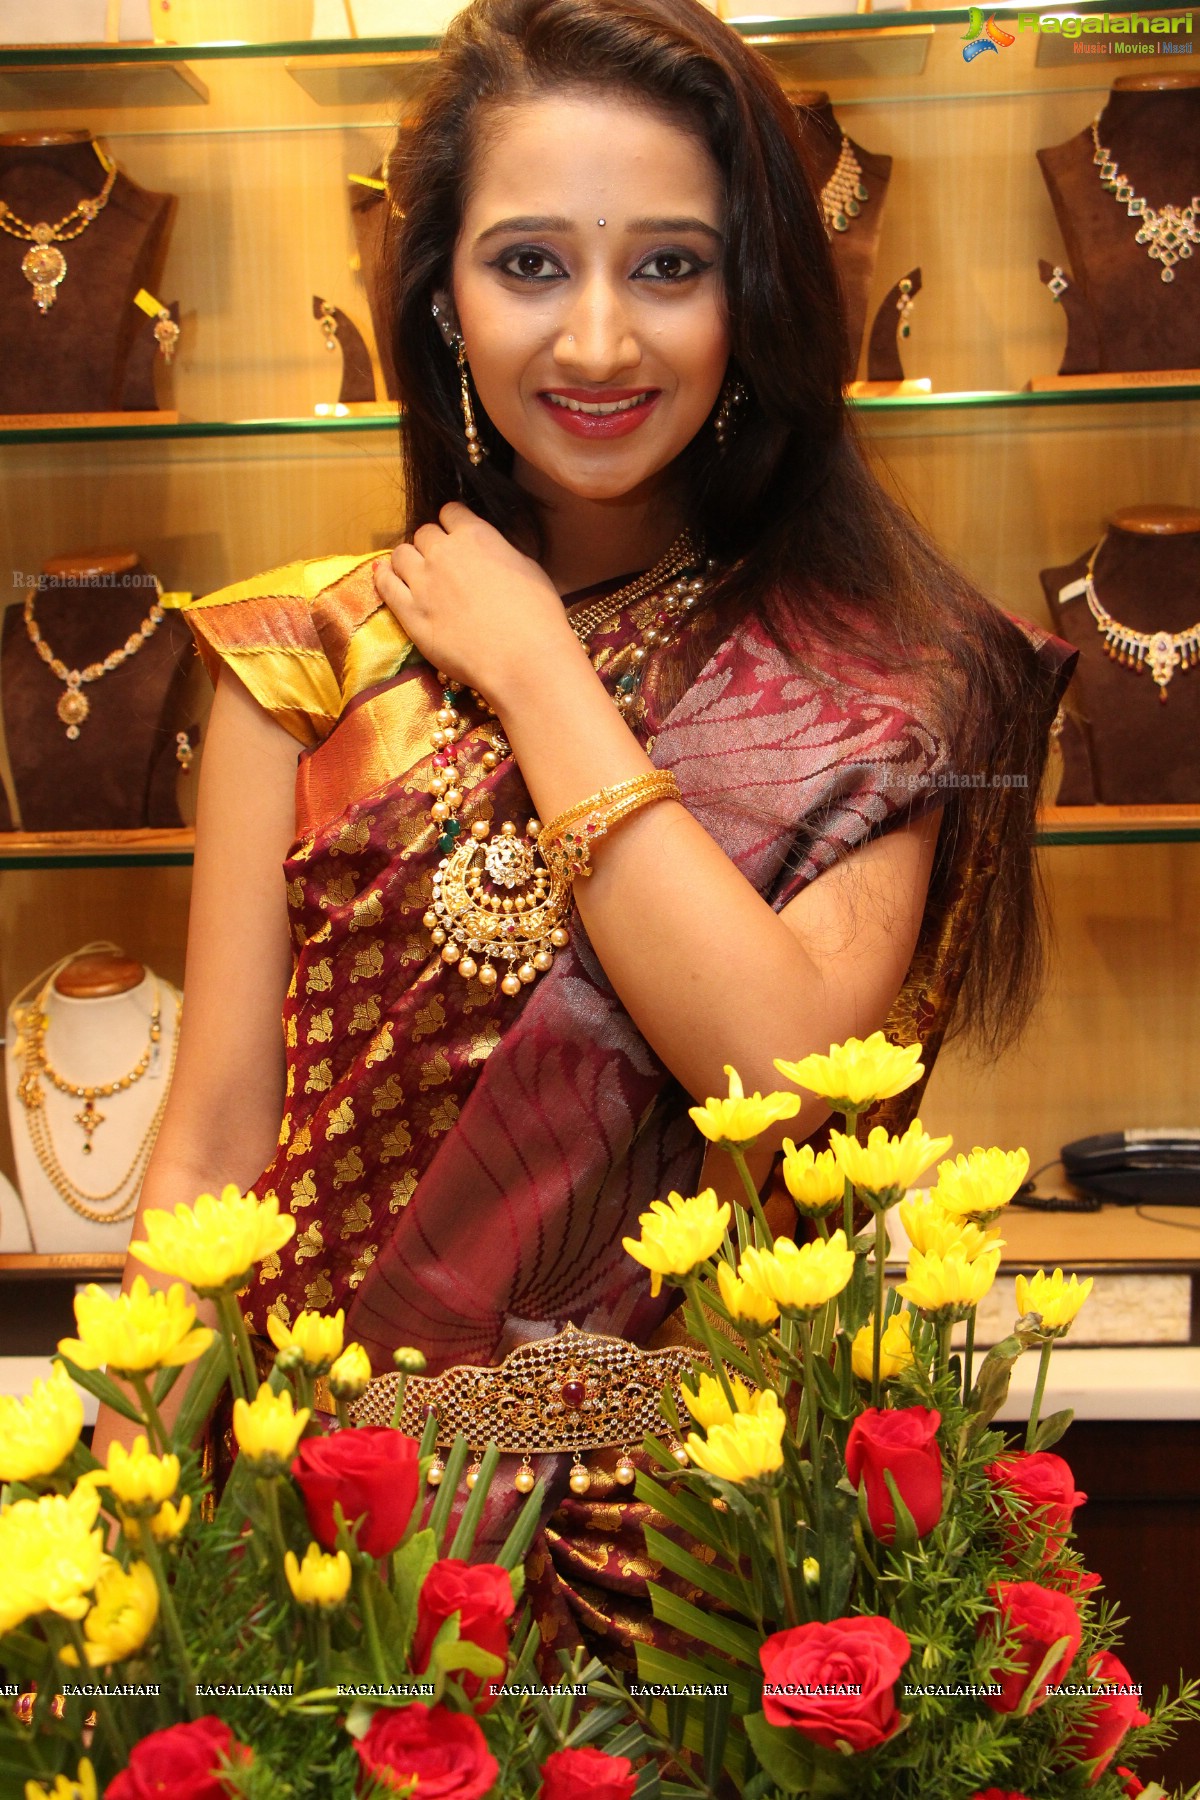 Akshaya Tritiya Collections 2014 at Manepally Jewellers, Hyderabad